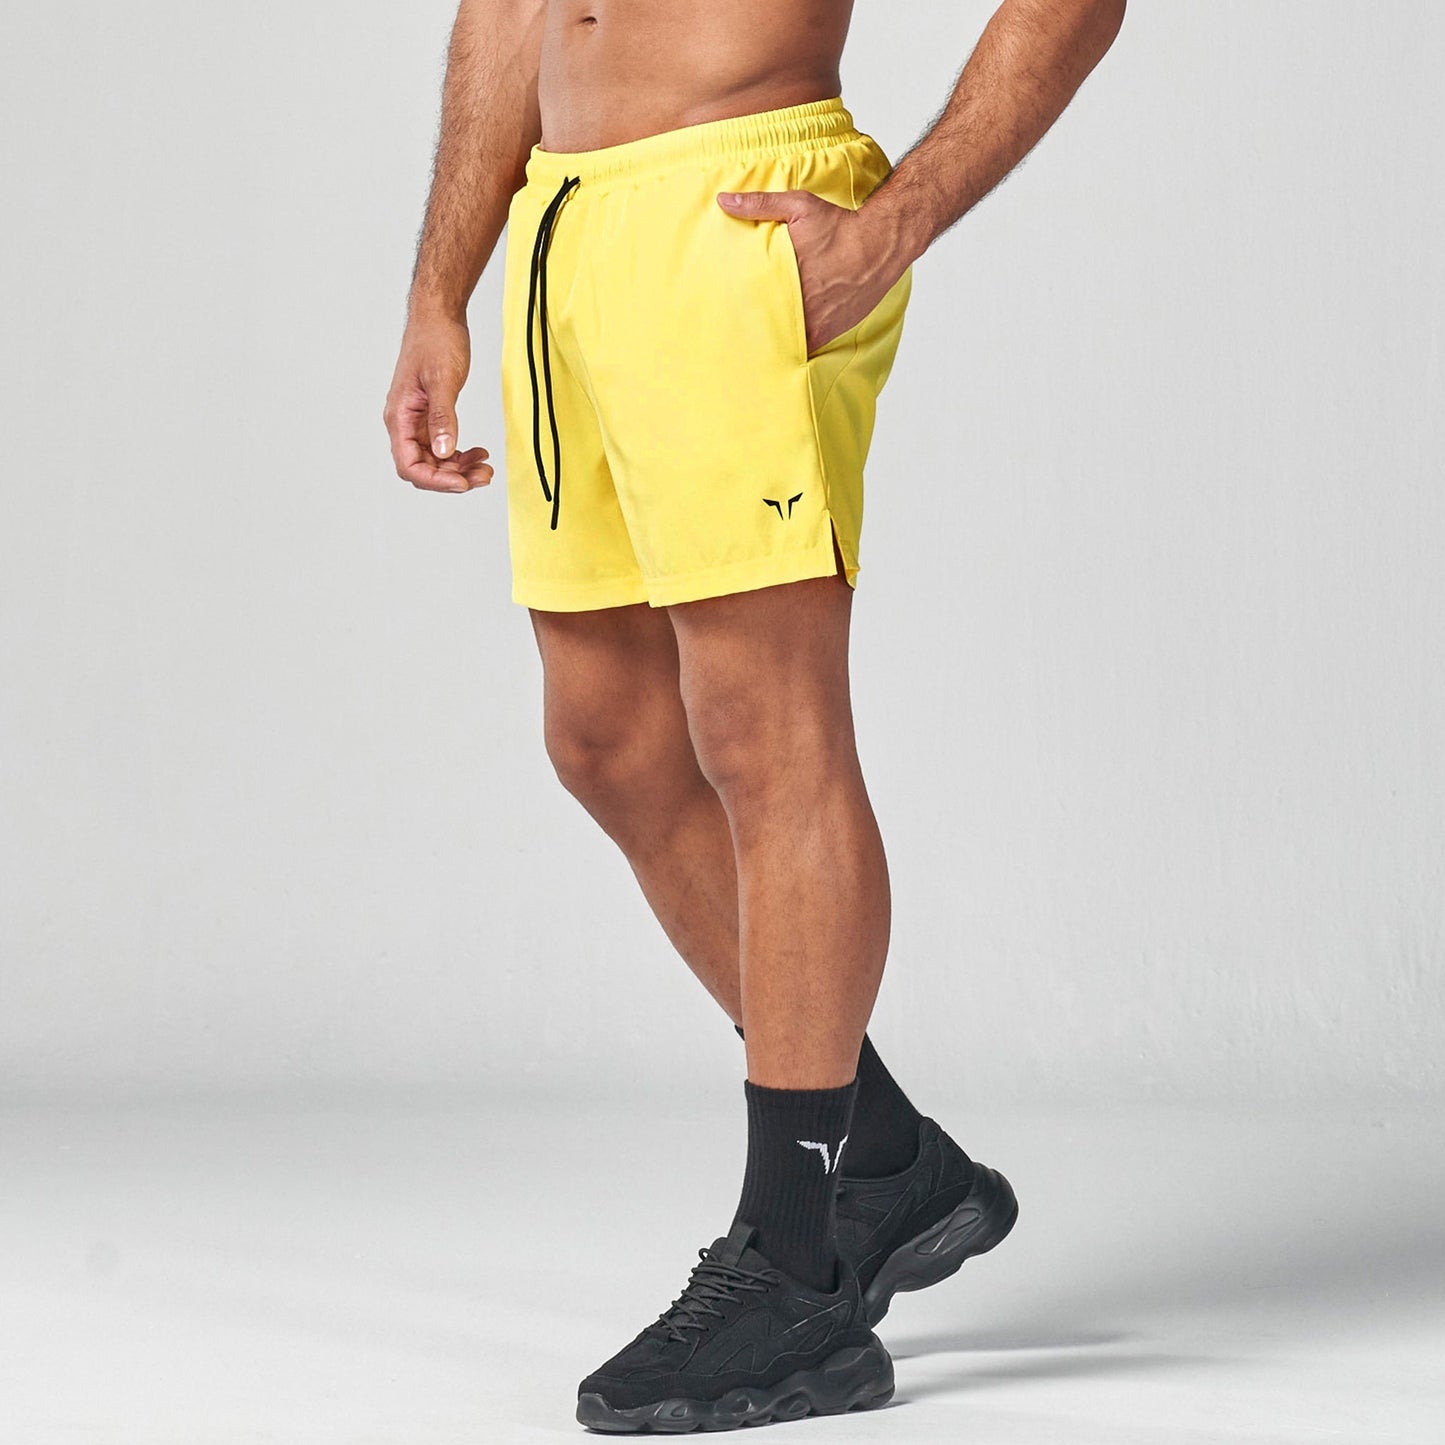 squatwolf-gym-wear-essential-5-inch-shorts-bundle-2-workout-short-for-men